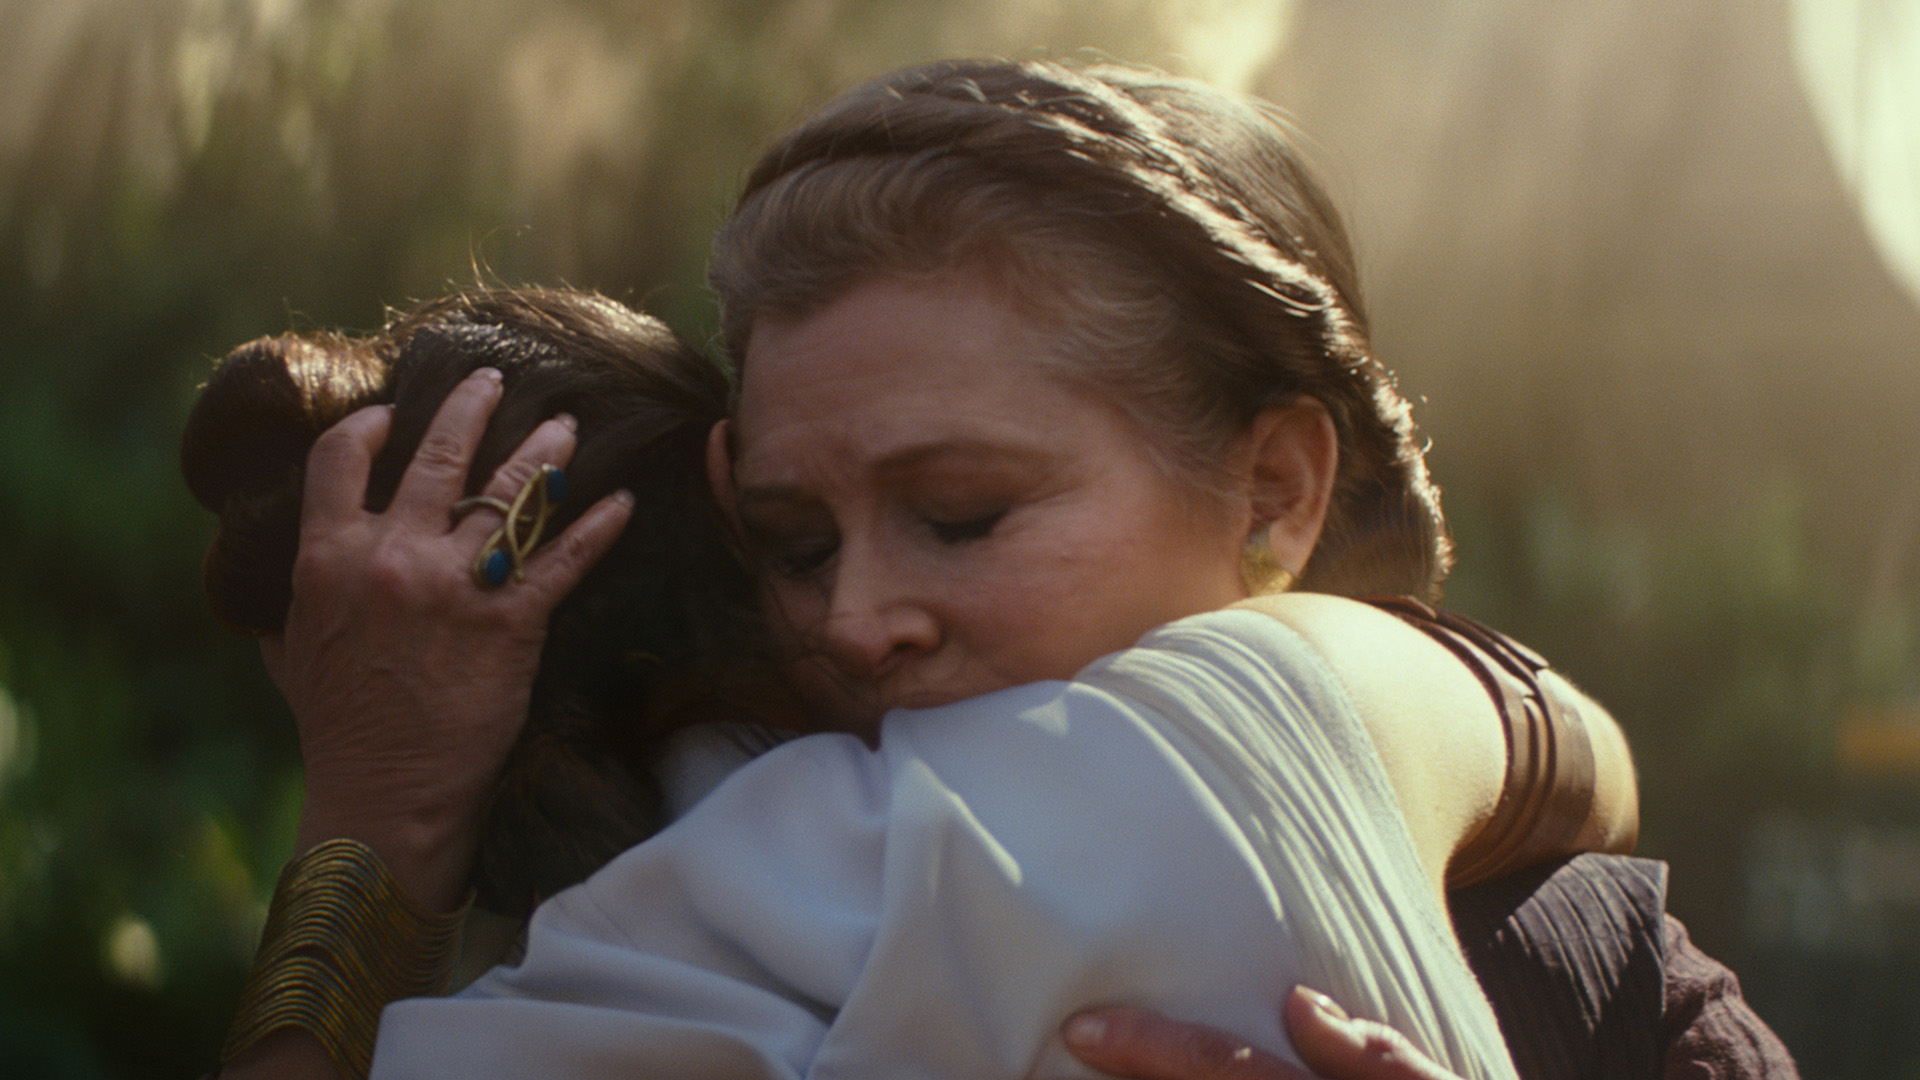 Leia Organa hugs Rey